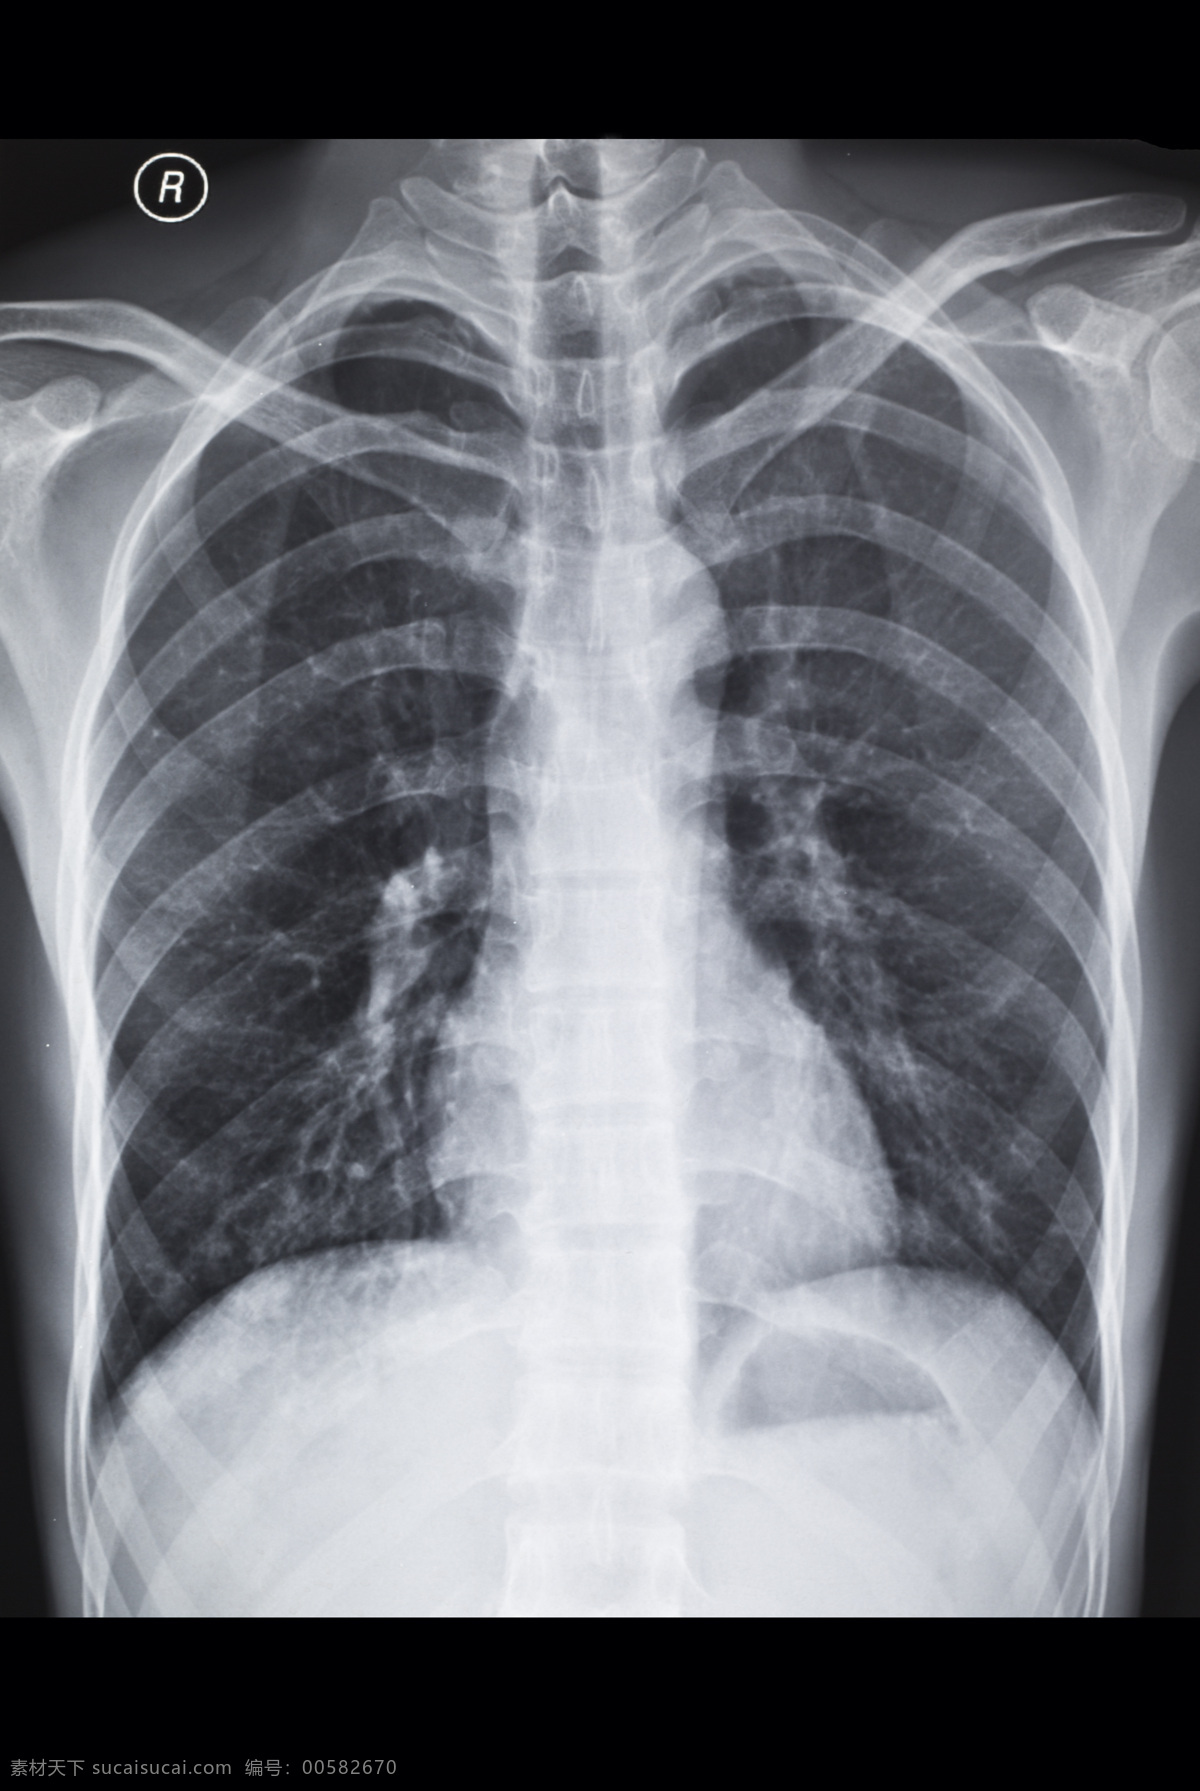 x光底片 x射线 骨骼 胸部扫描 底片 x射线扫描 医院 医疗 医学 病人 医疗护理 现代科技